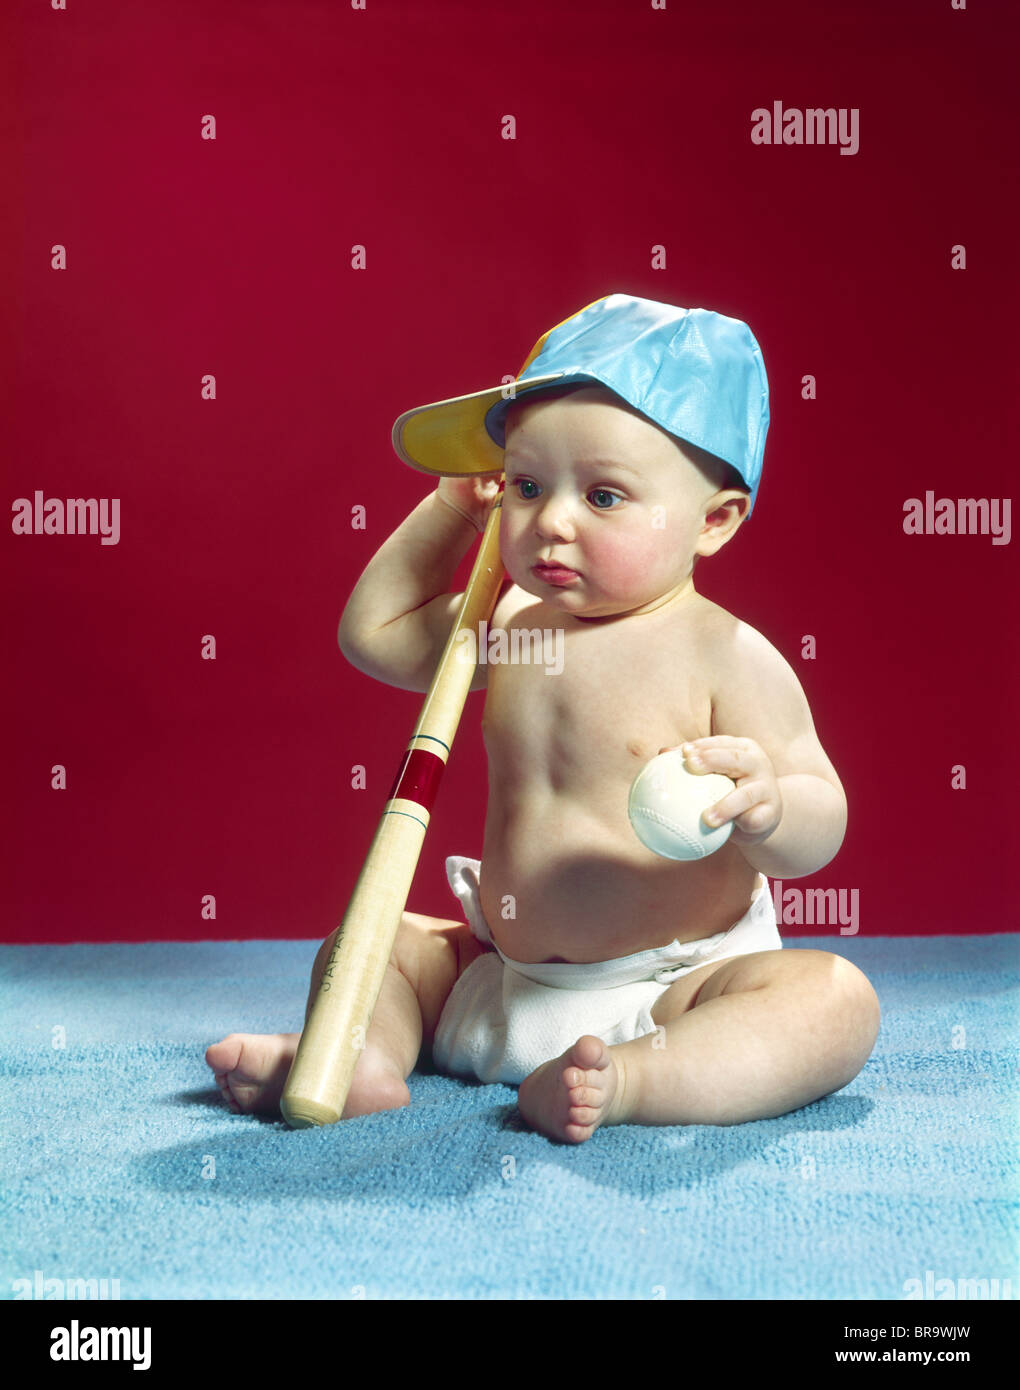 1960s BABY WEARING BLUE BASEBALL CAP HOLDING BALL AND BAT Stock Photo